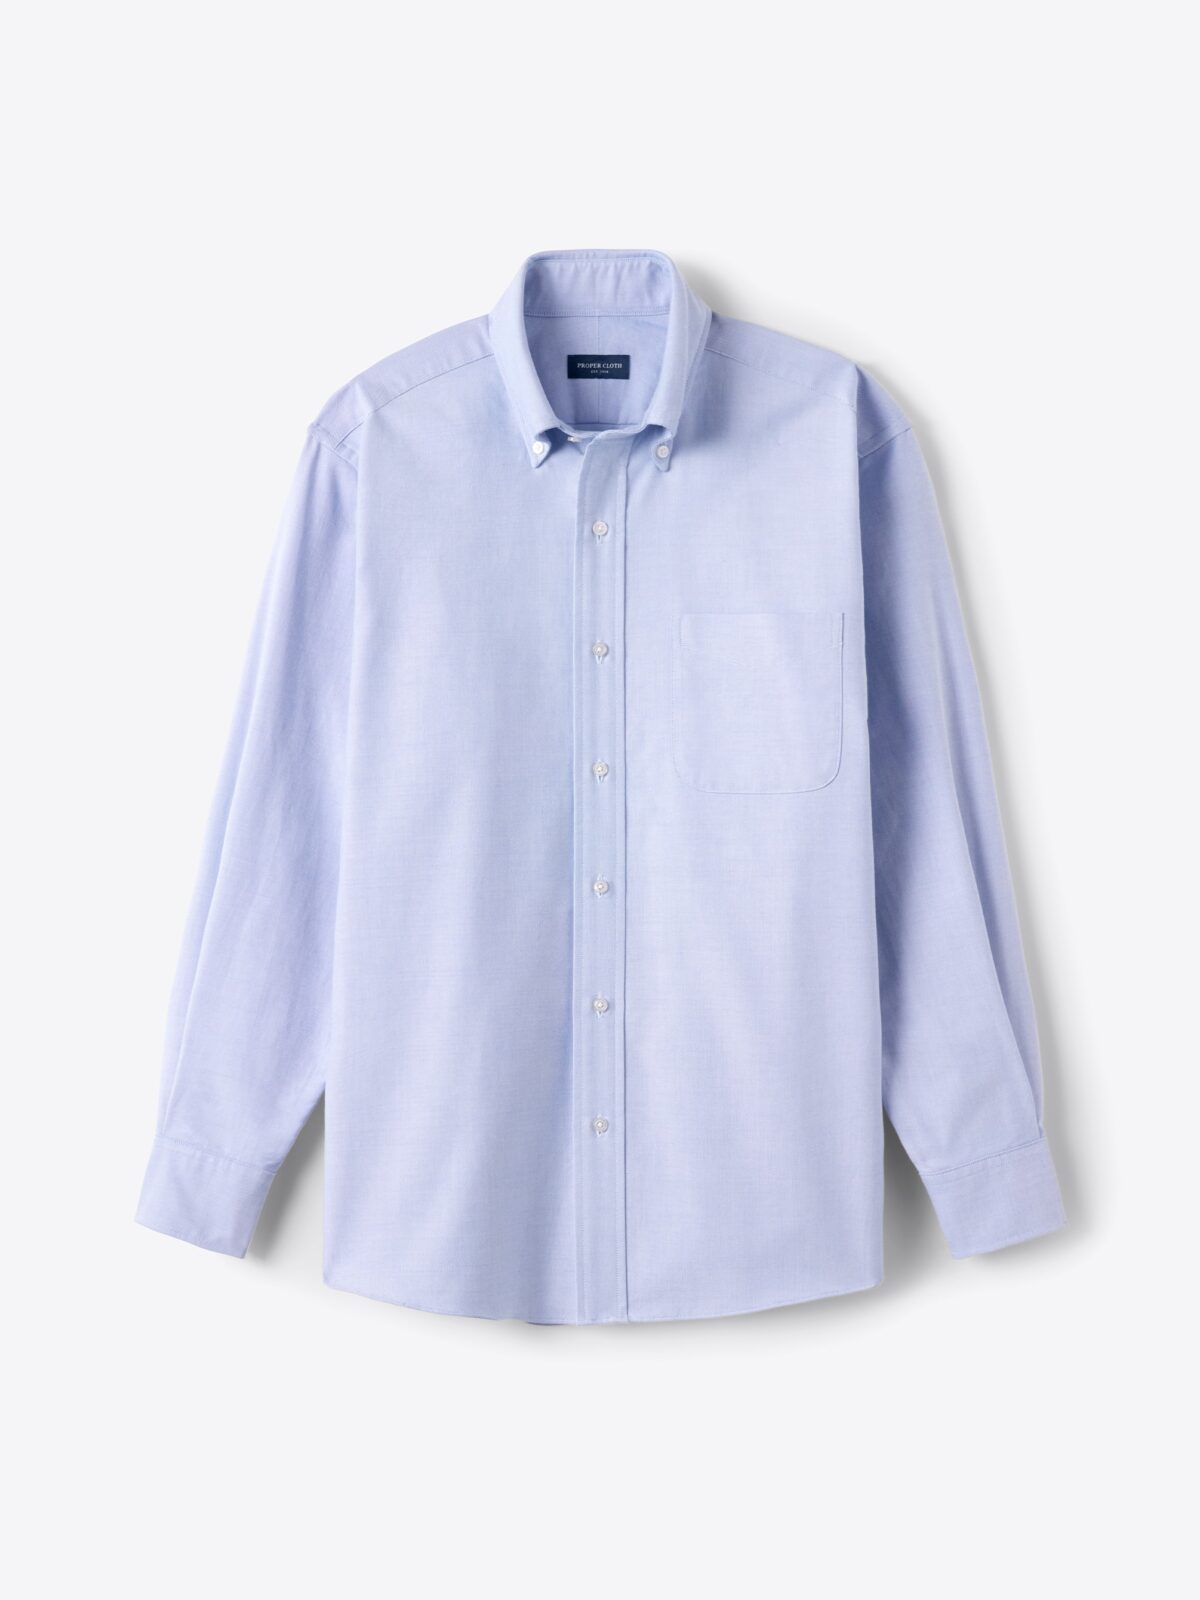 Men's Light Blue Sea Island Cotton Formal Shirt